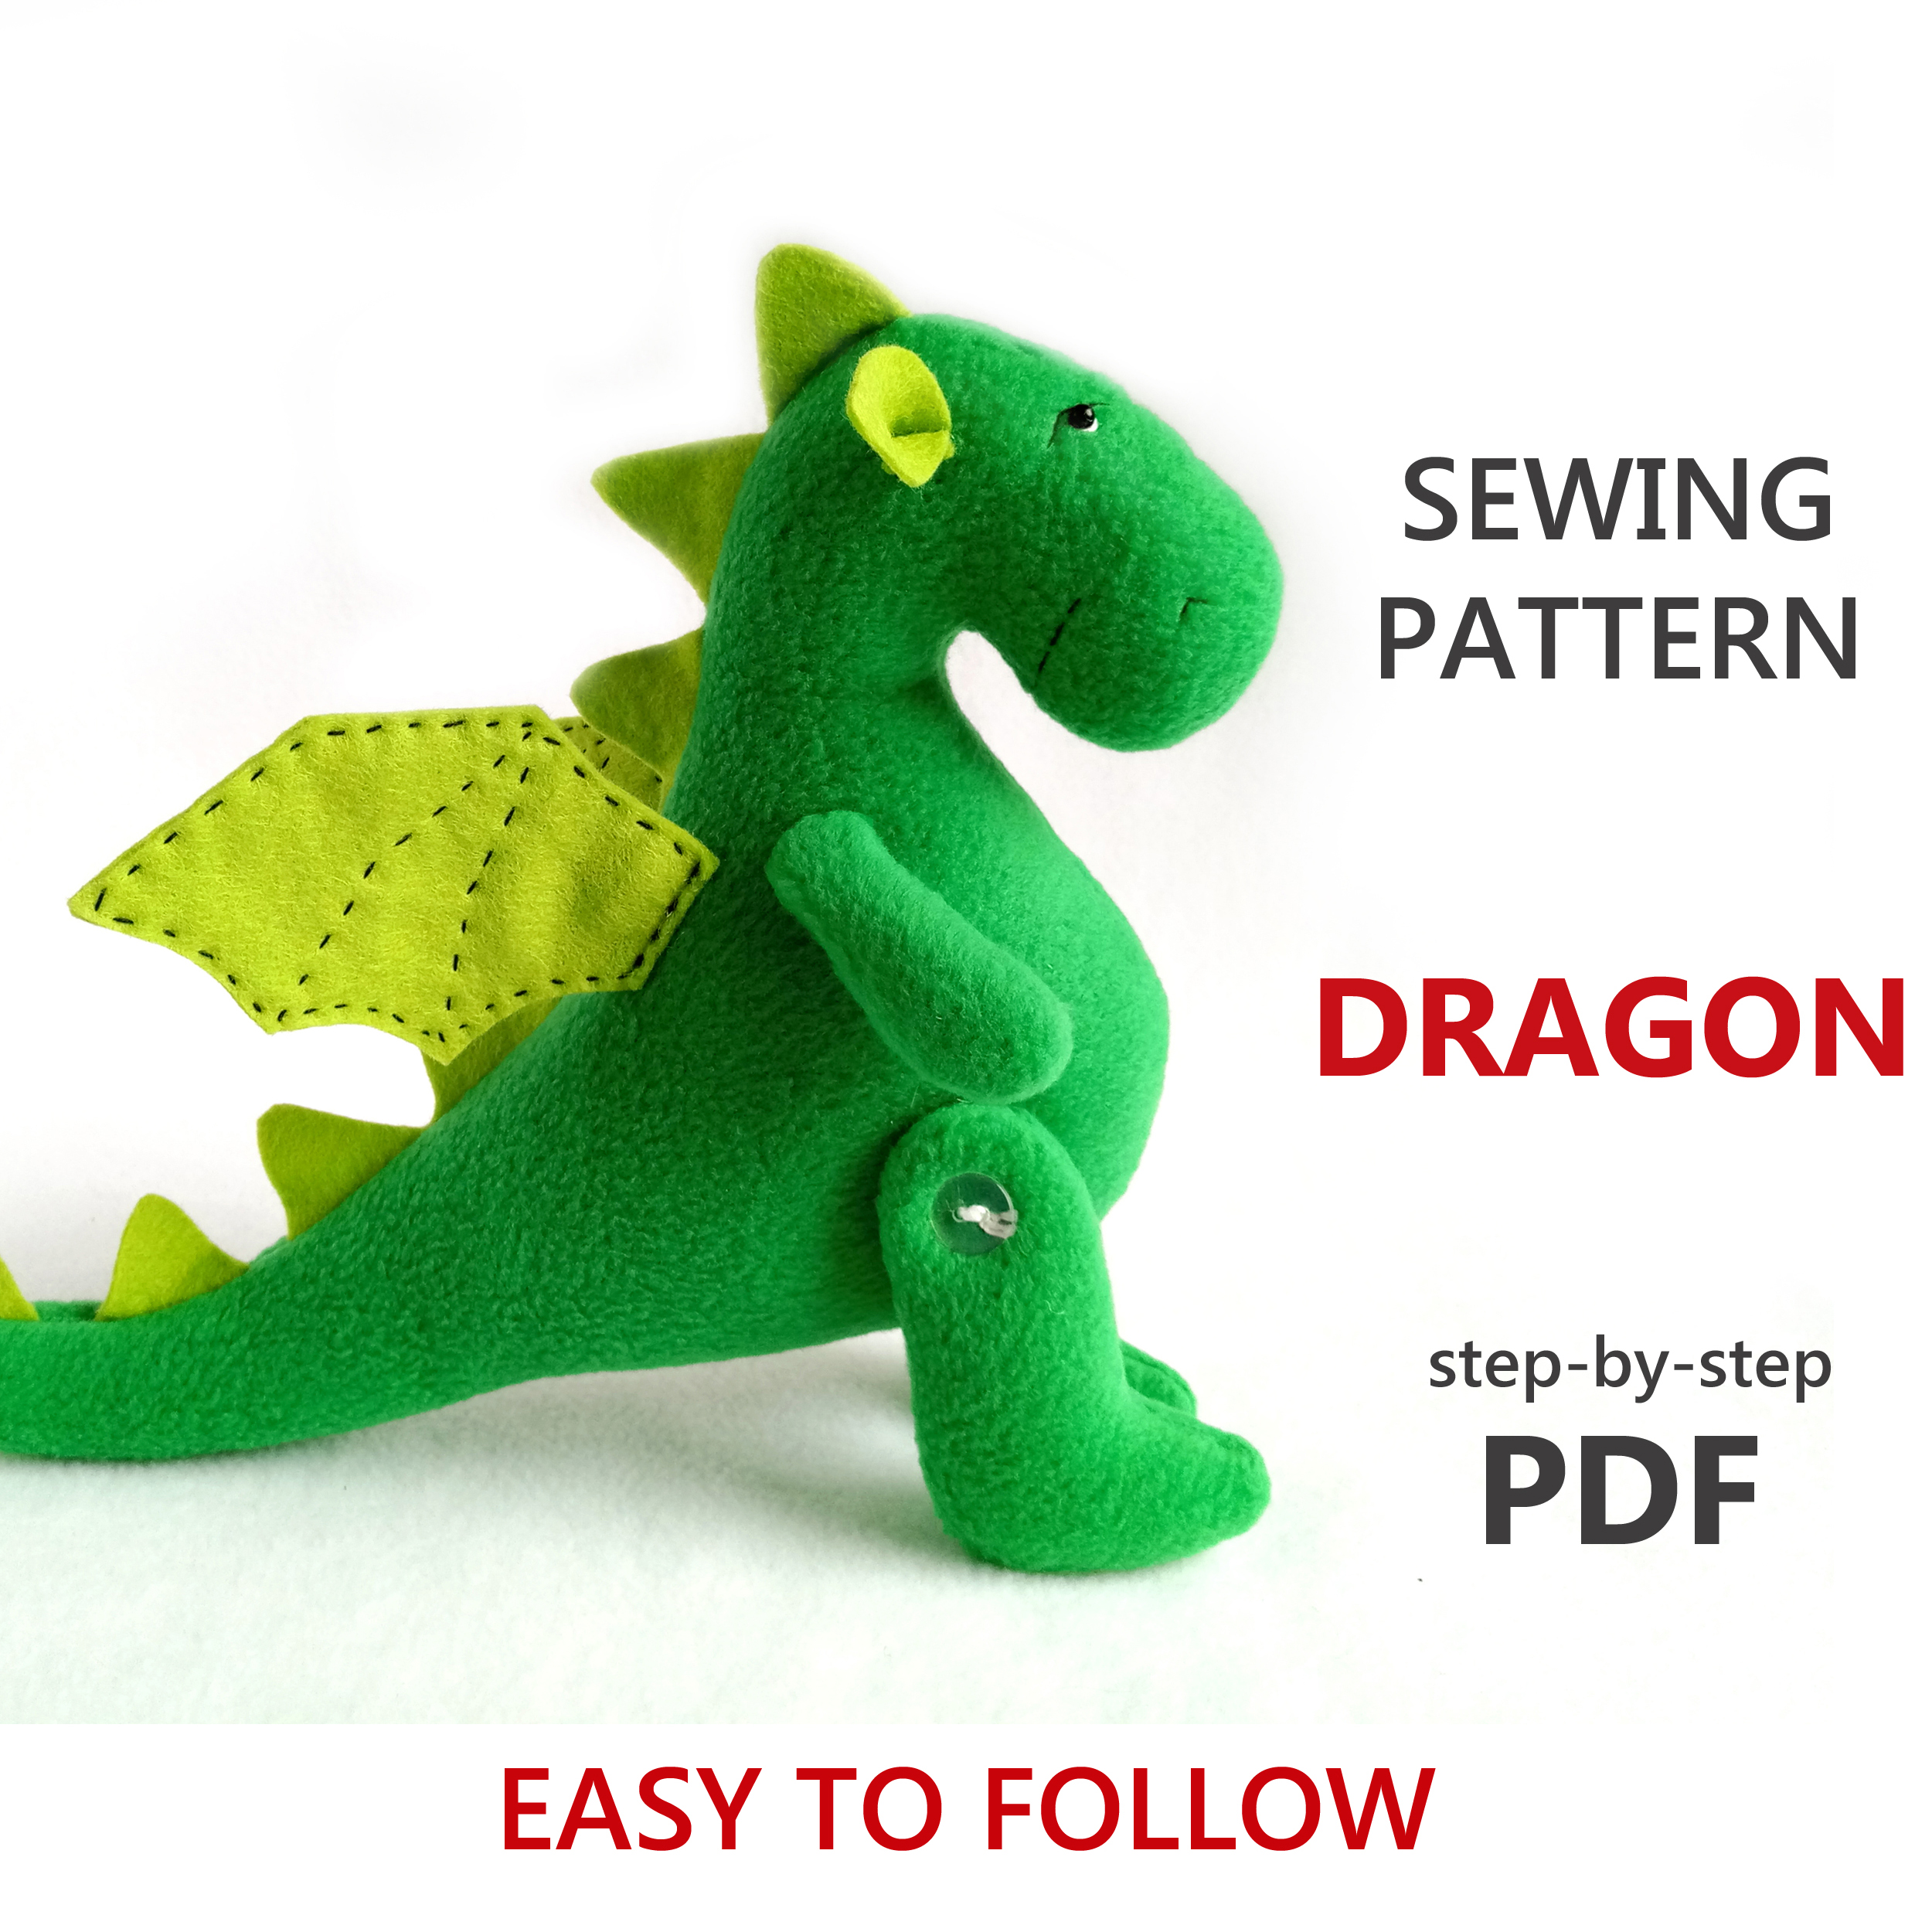 8 FREE Dragon Stuffed Animal Patterns to Sew